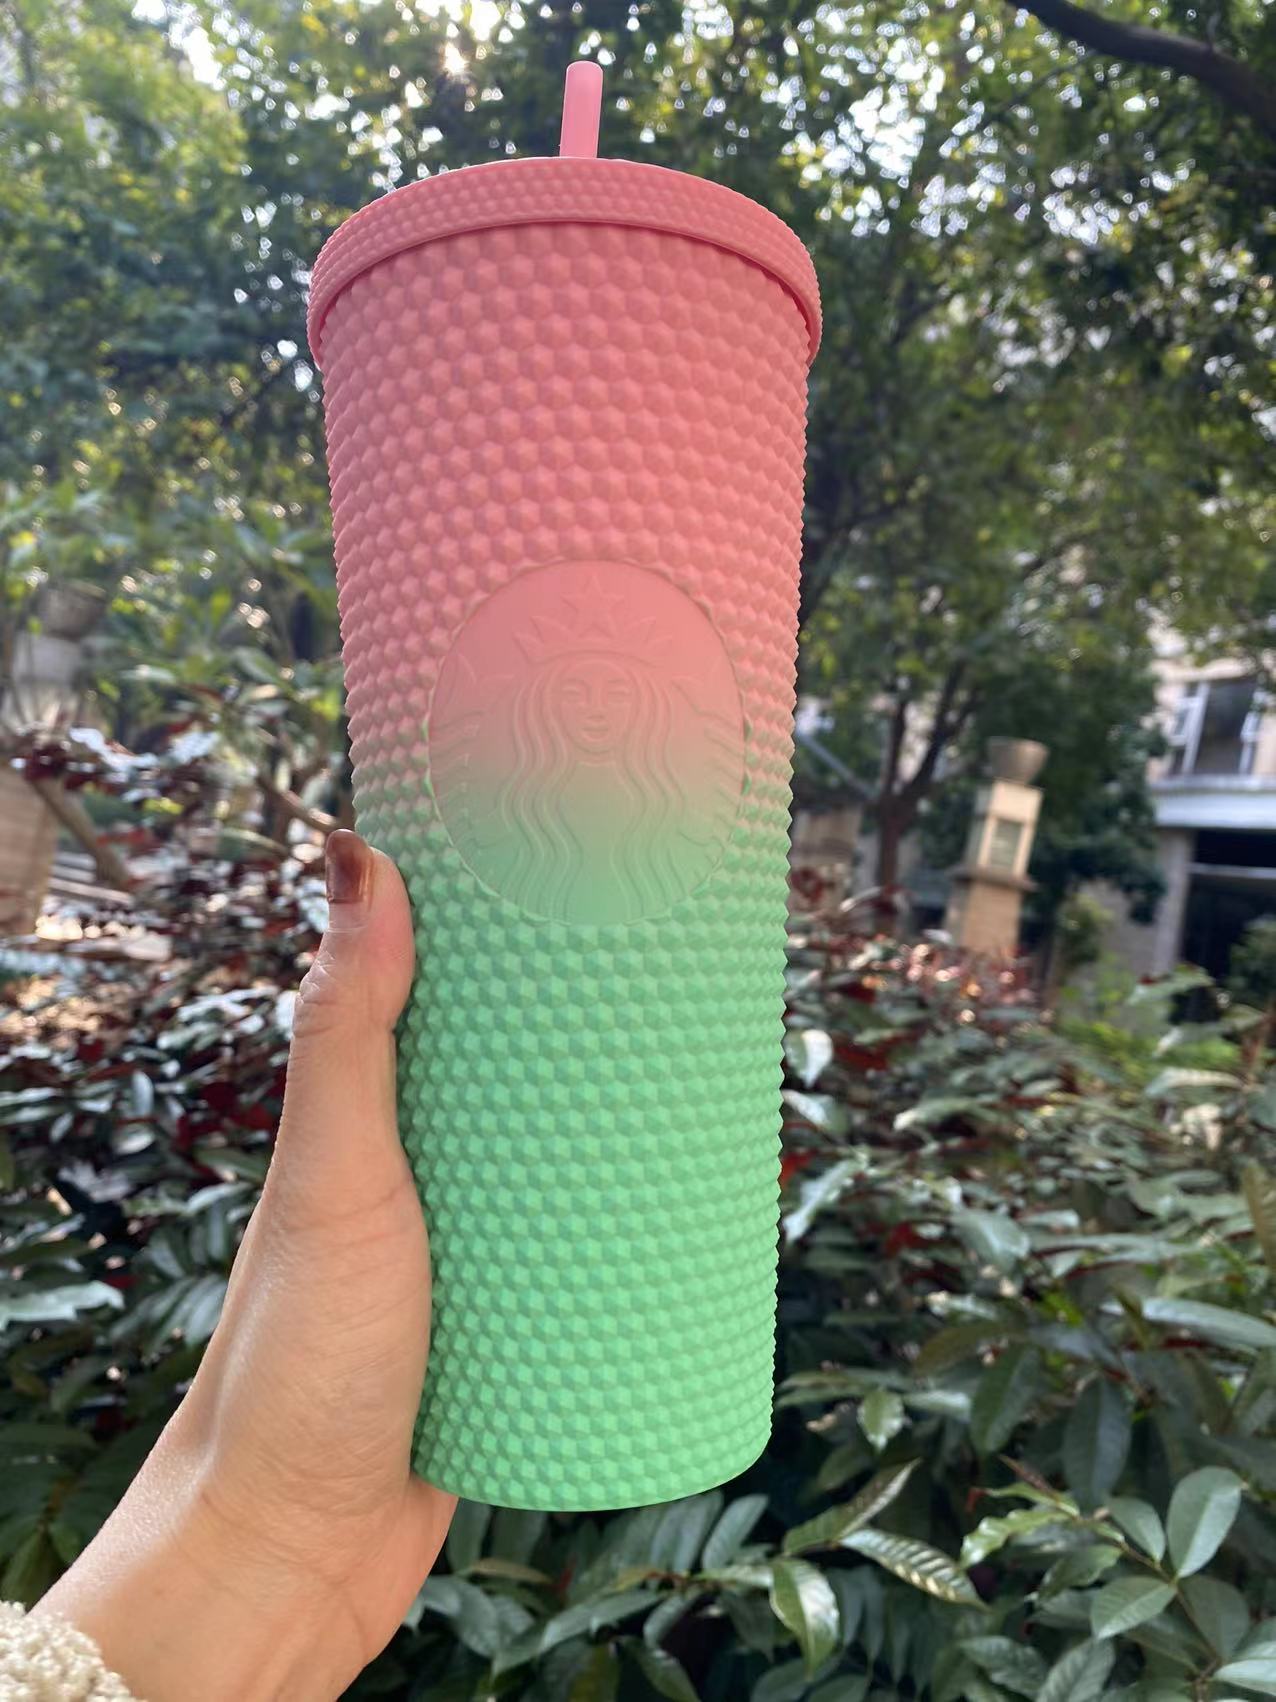 Starbucks Aurora Gradient Blue/Pink Grande Studded Tumbler Straw Cup 1